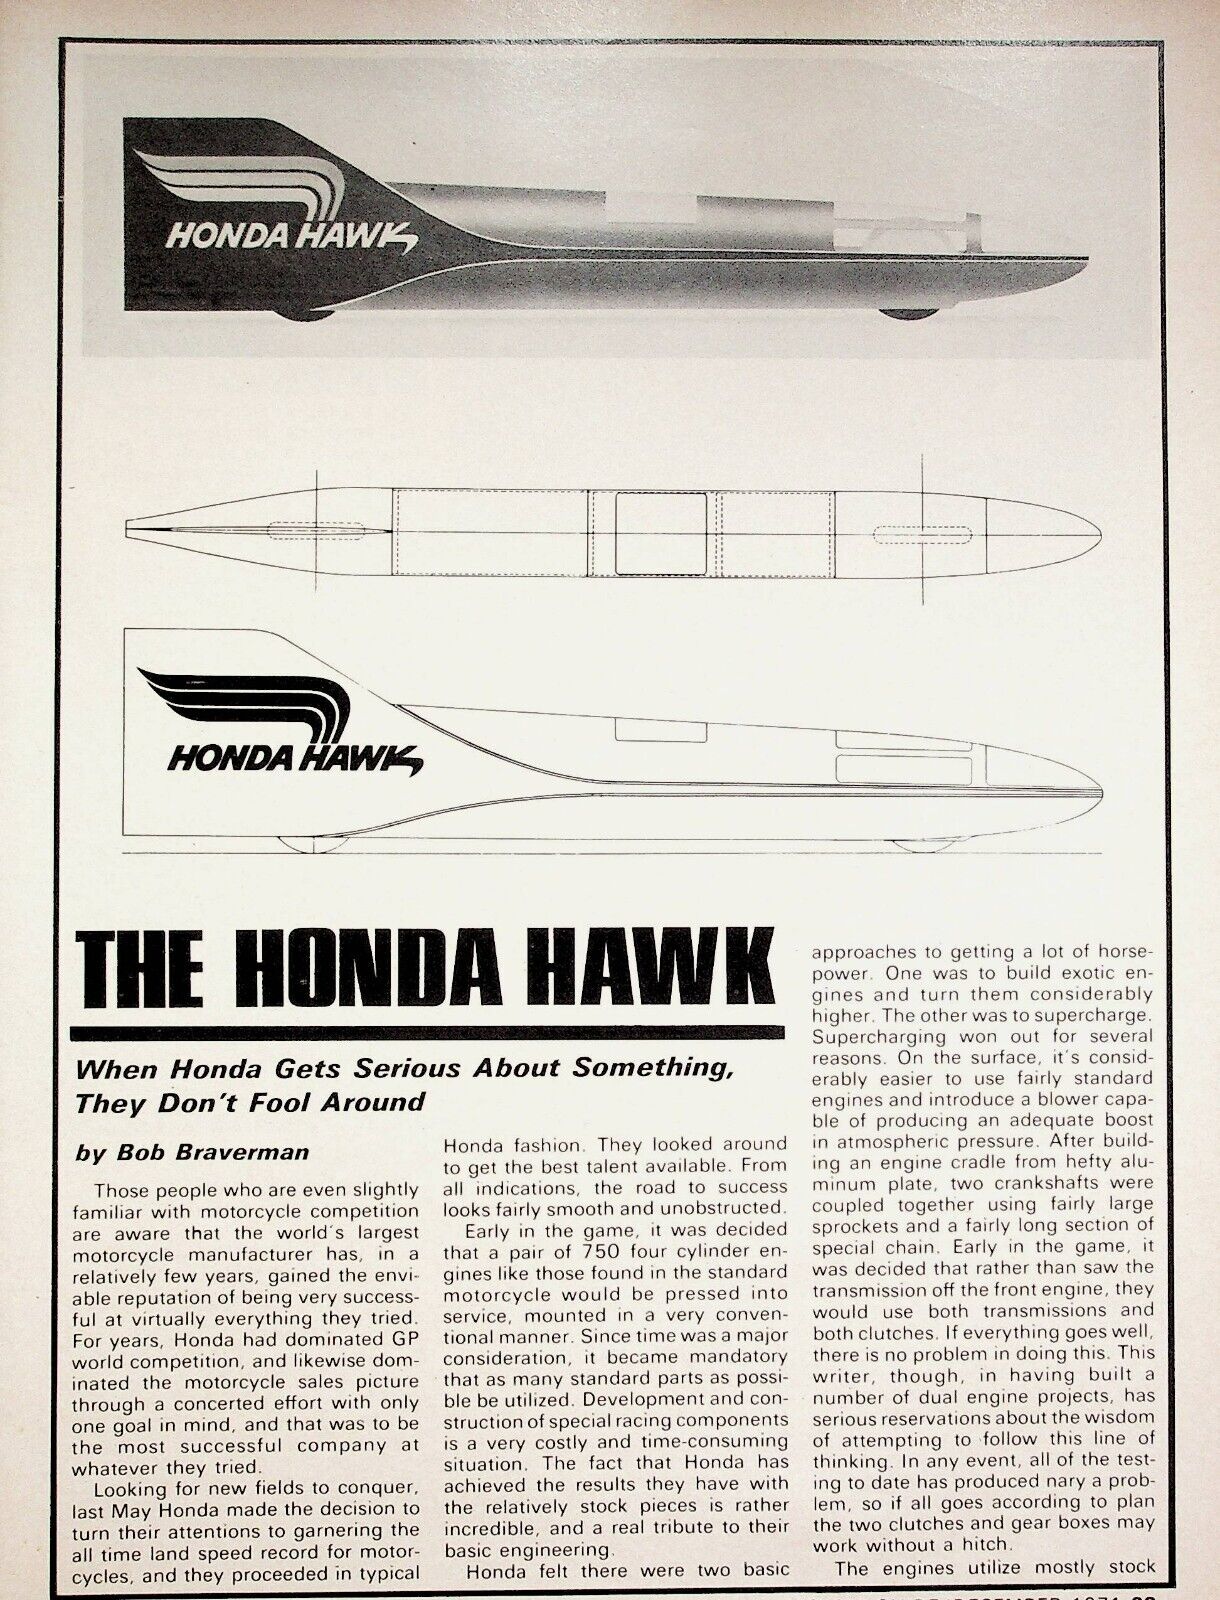 1971 Honda Hawk - 8-Page Vintage Motorcycle Article